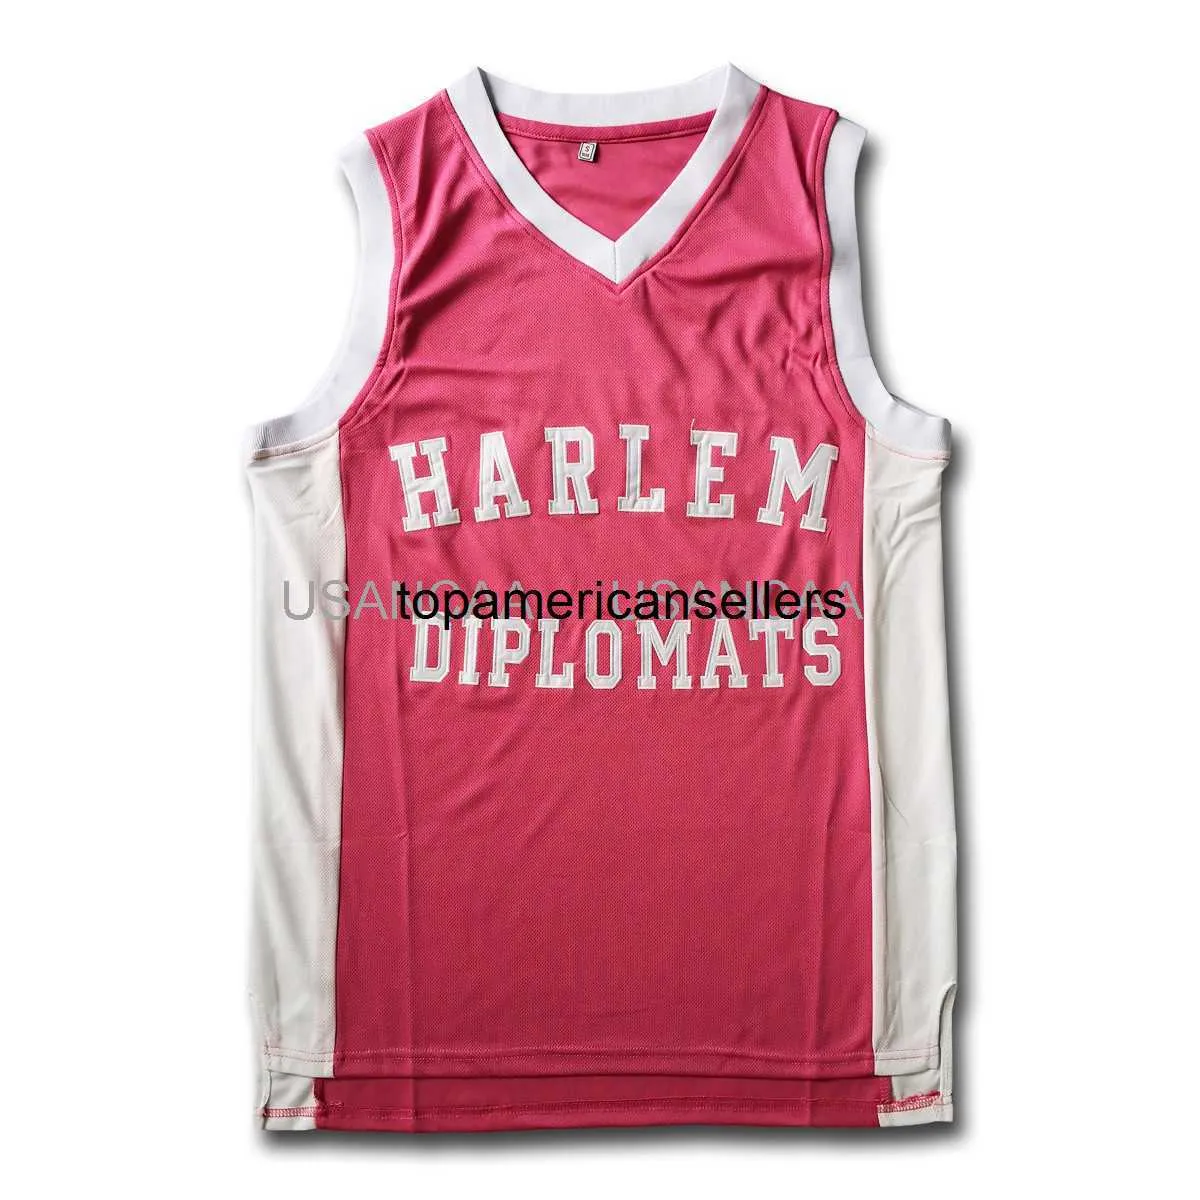 Vollstickerei Killa Harlem Diplomaten Pink Basketball Jersey Retro College Jersey XS-6XL